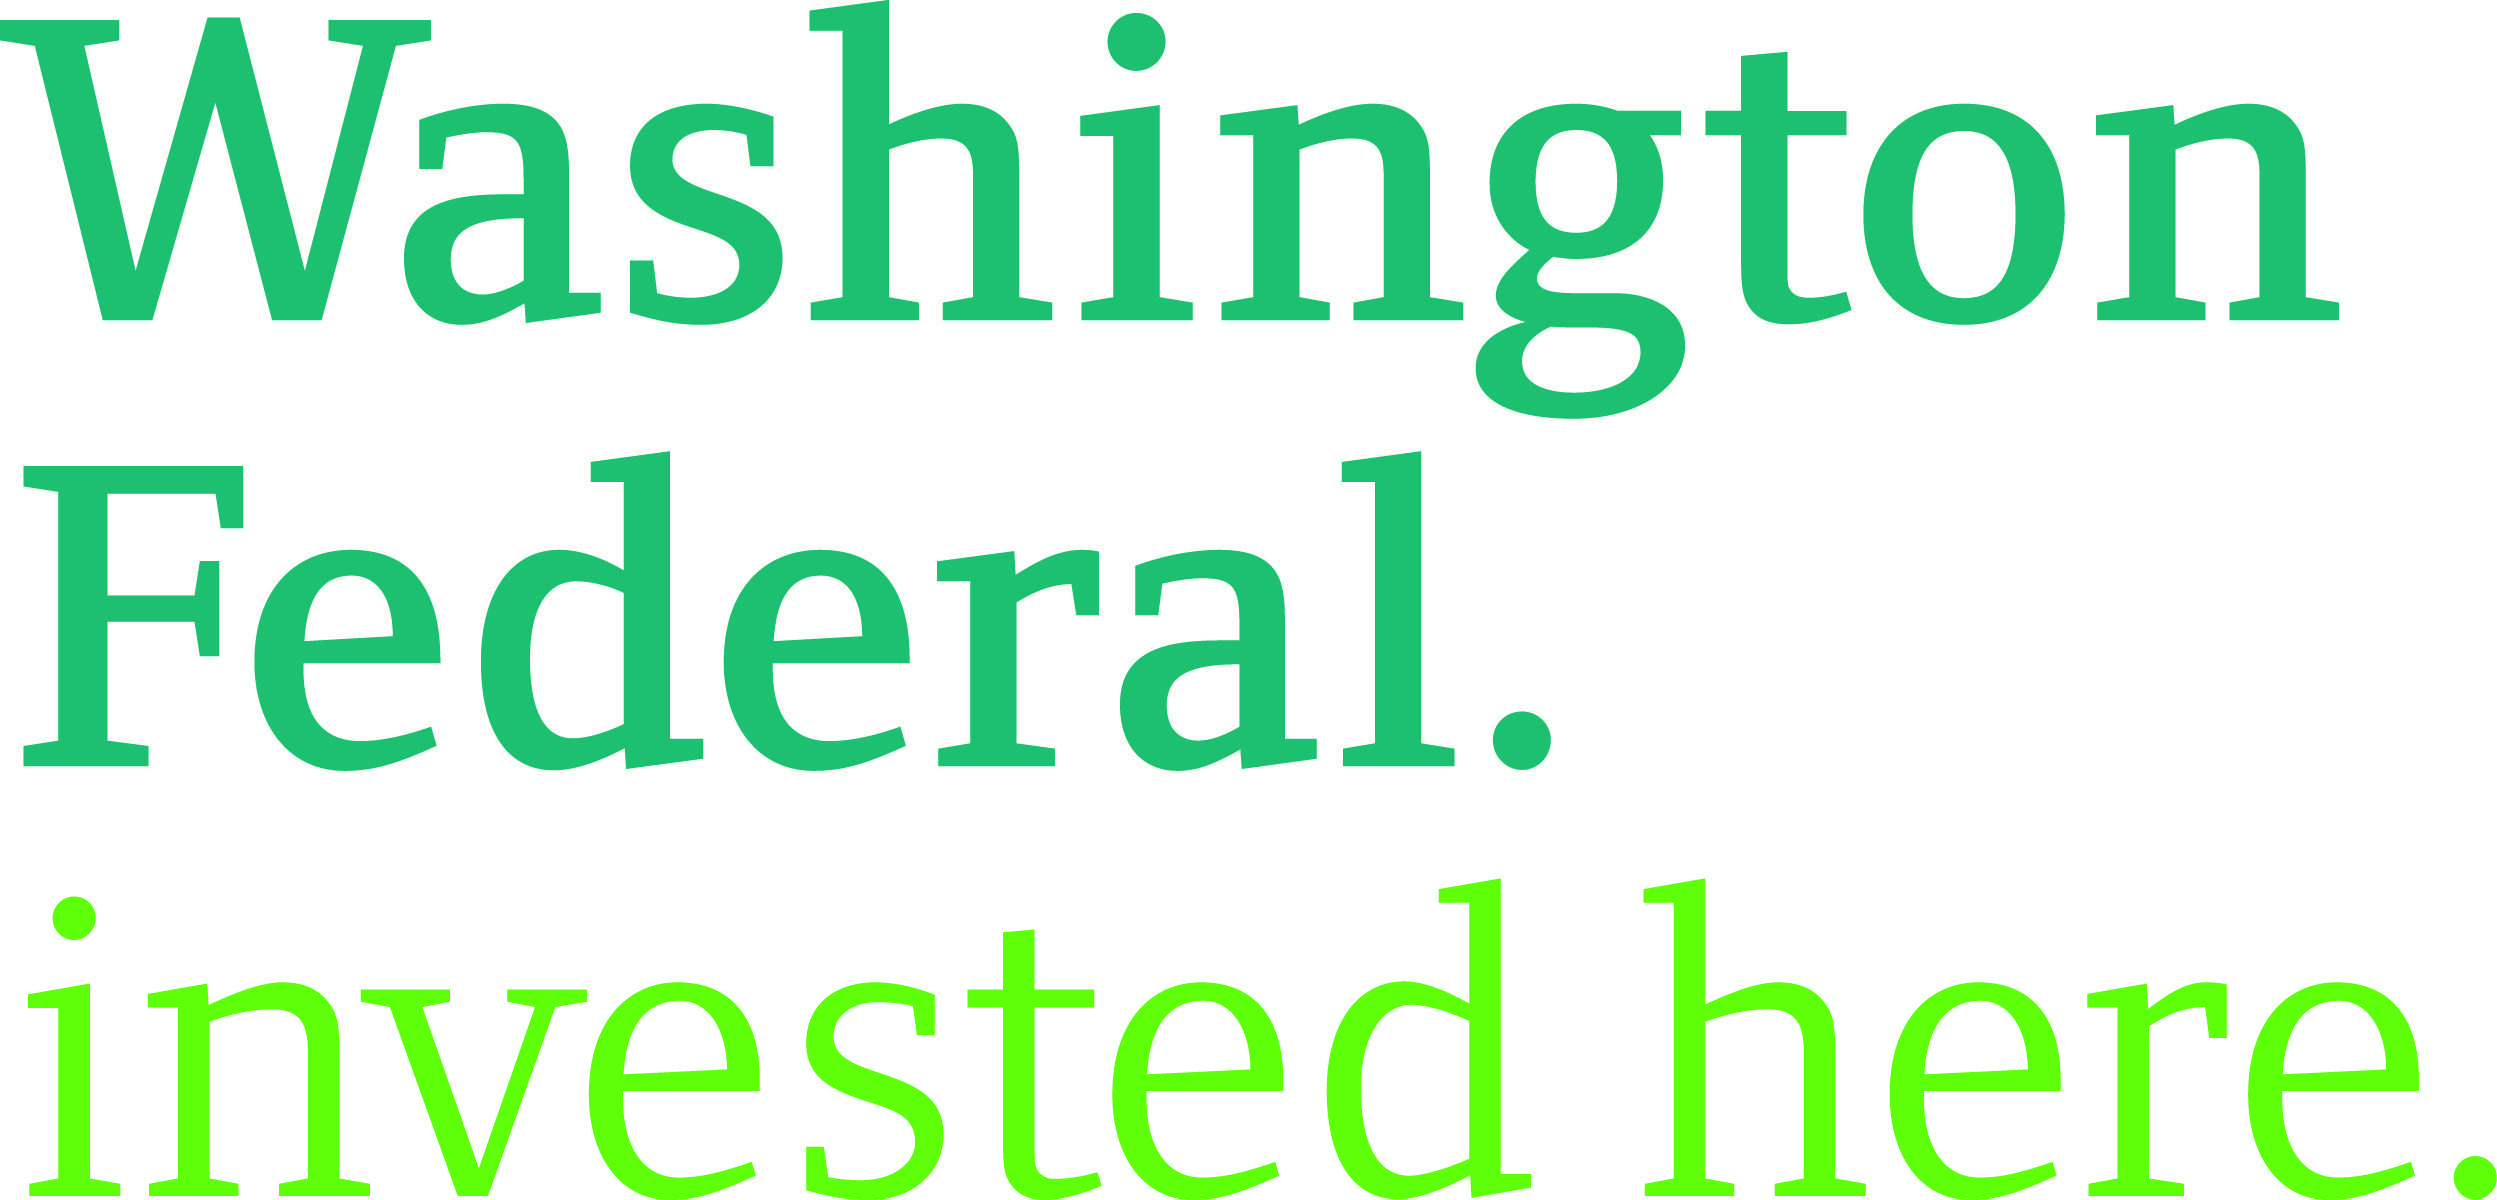 Washington Federal Logo - Washington Federal